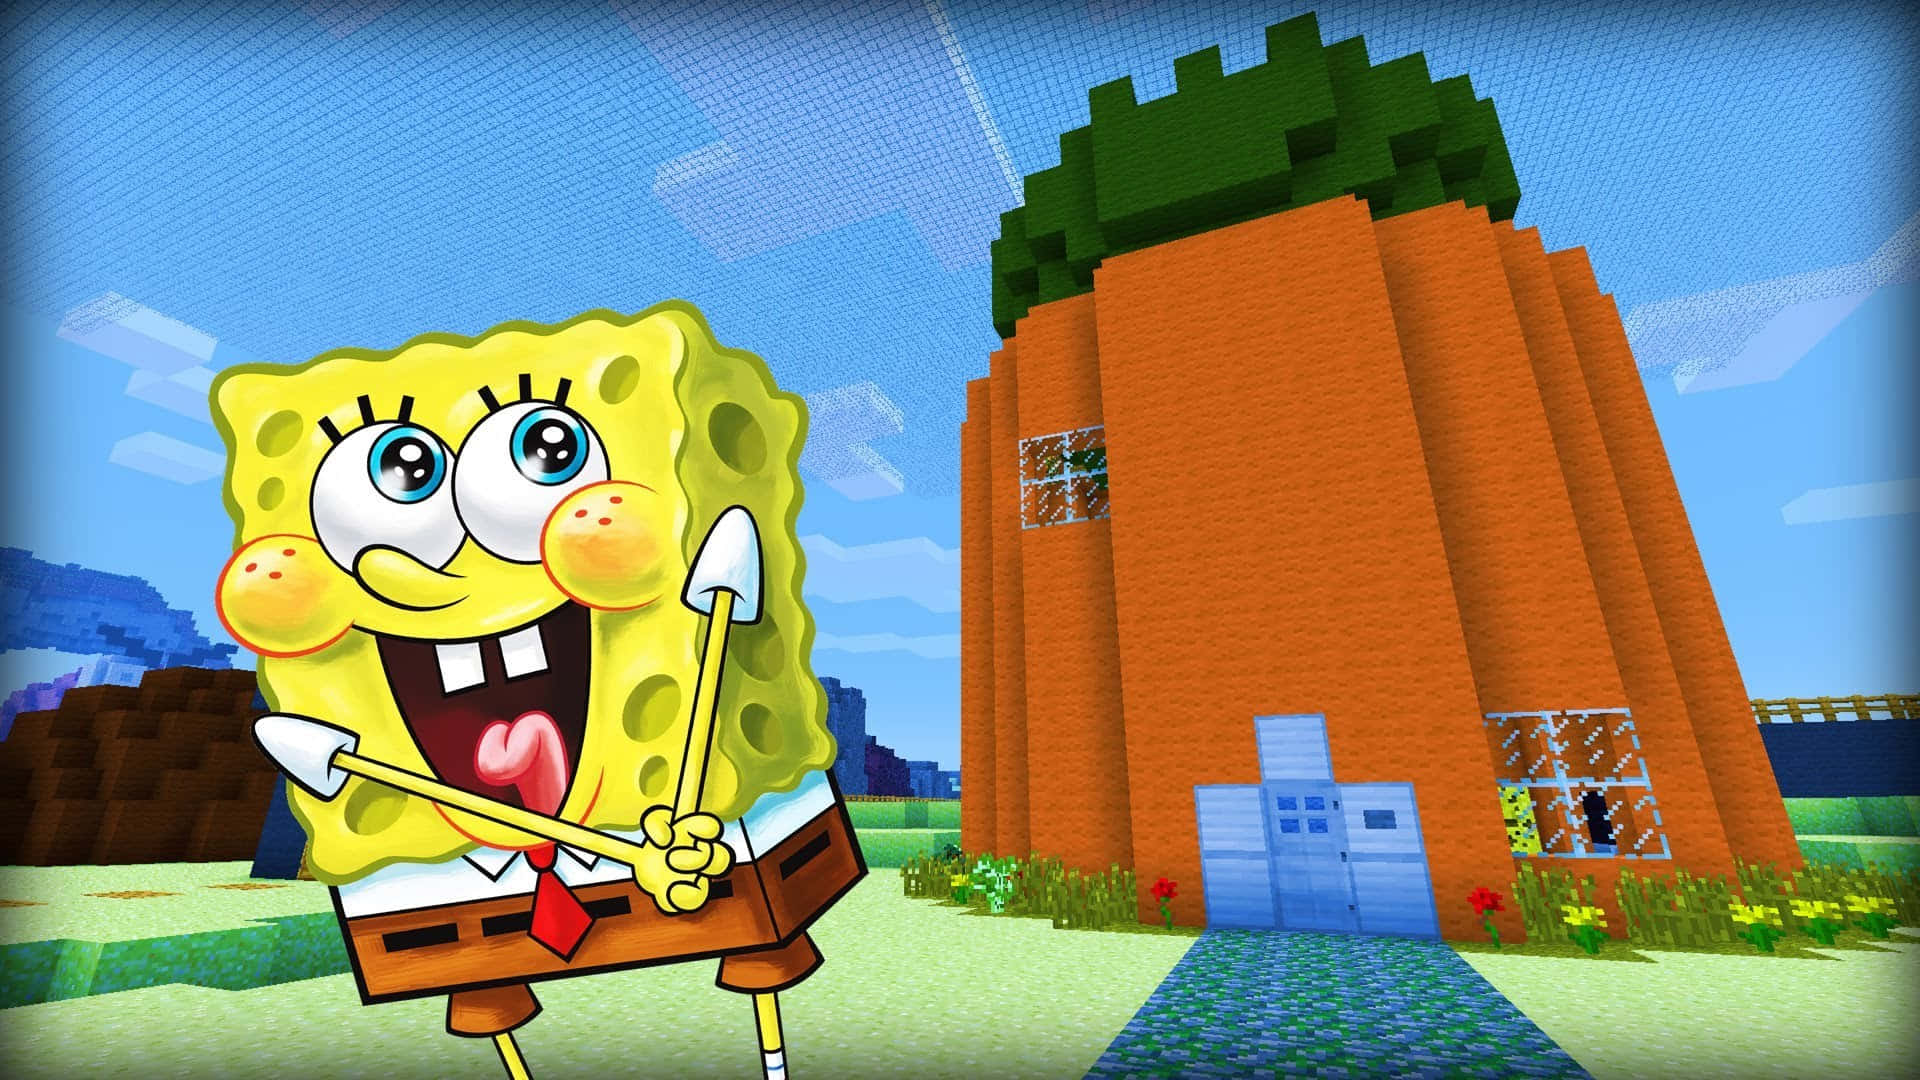 Get ready to get Krabby with Spongebob Squarepants!